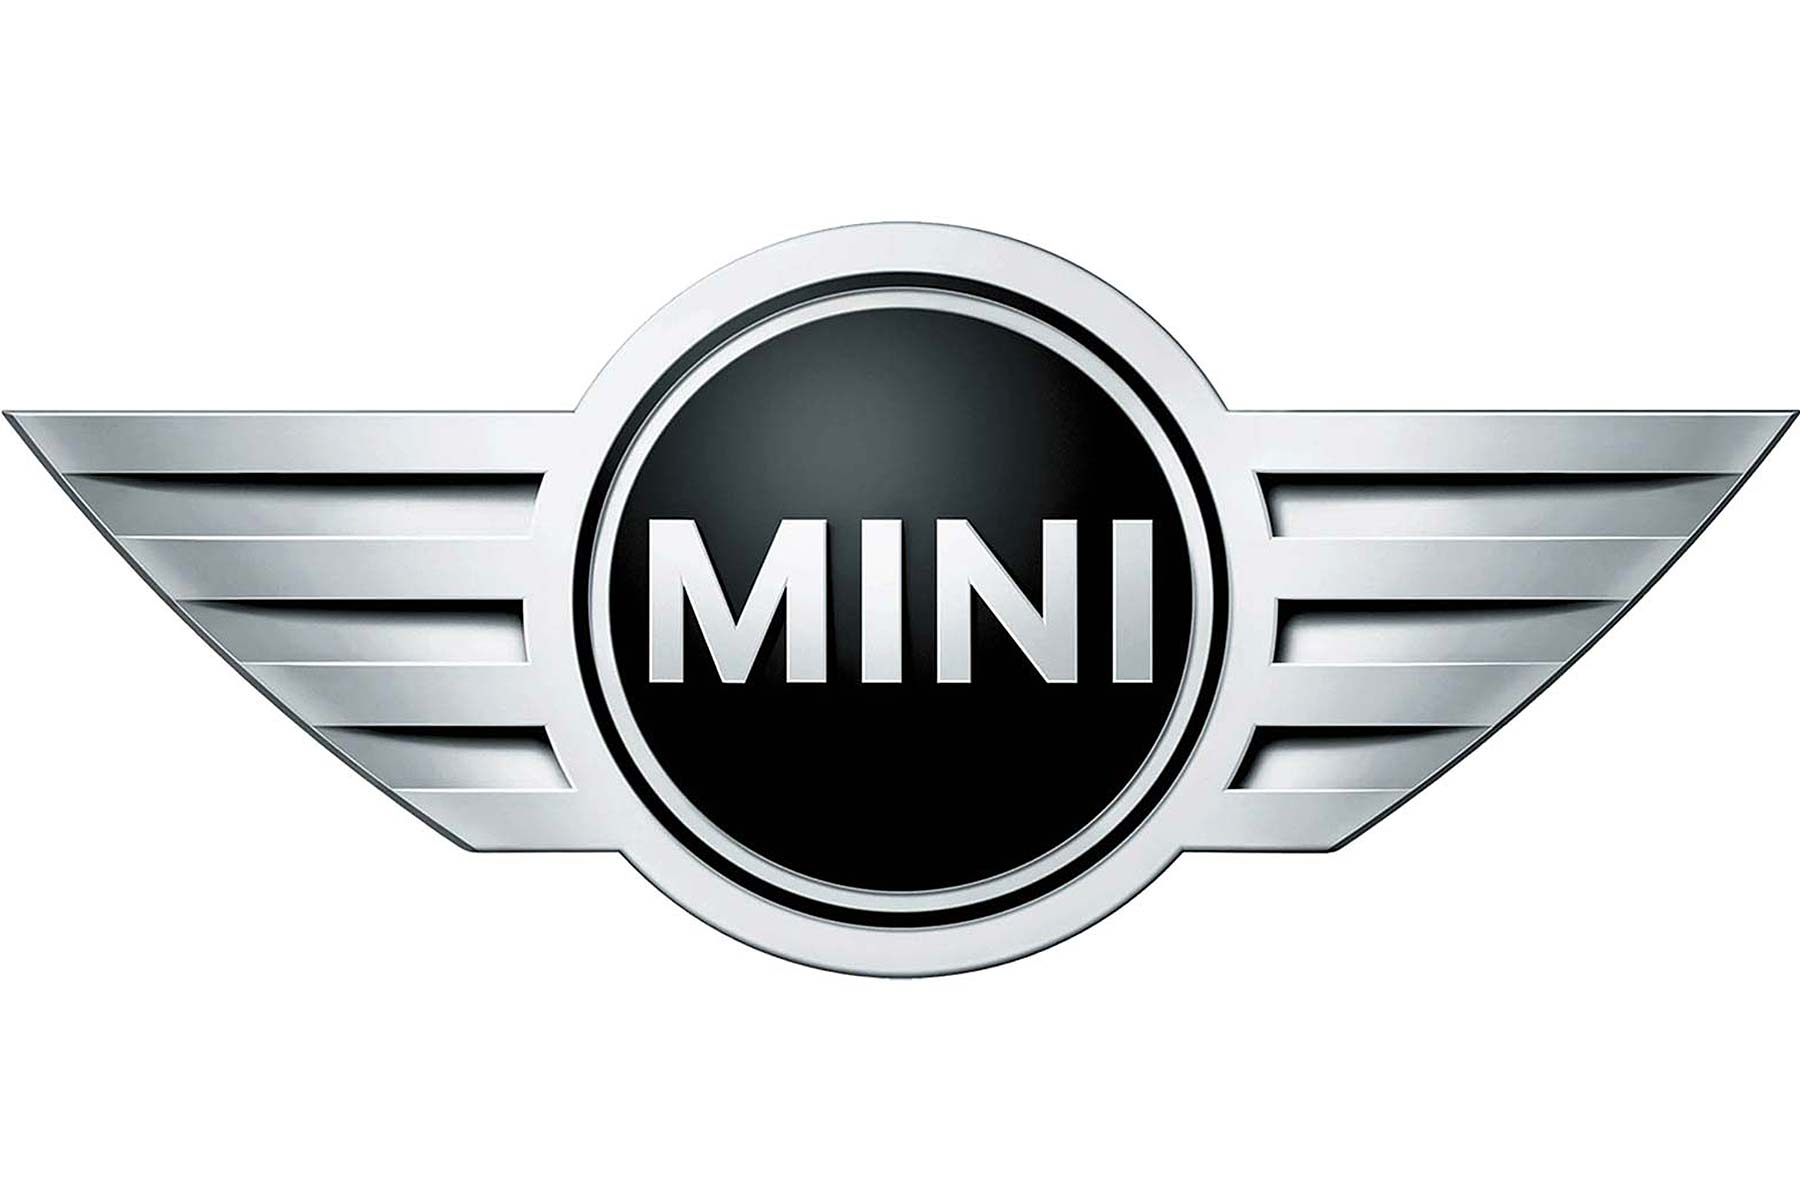 New Mini Logo - Mini is getting a new logo for 2018